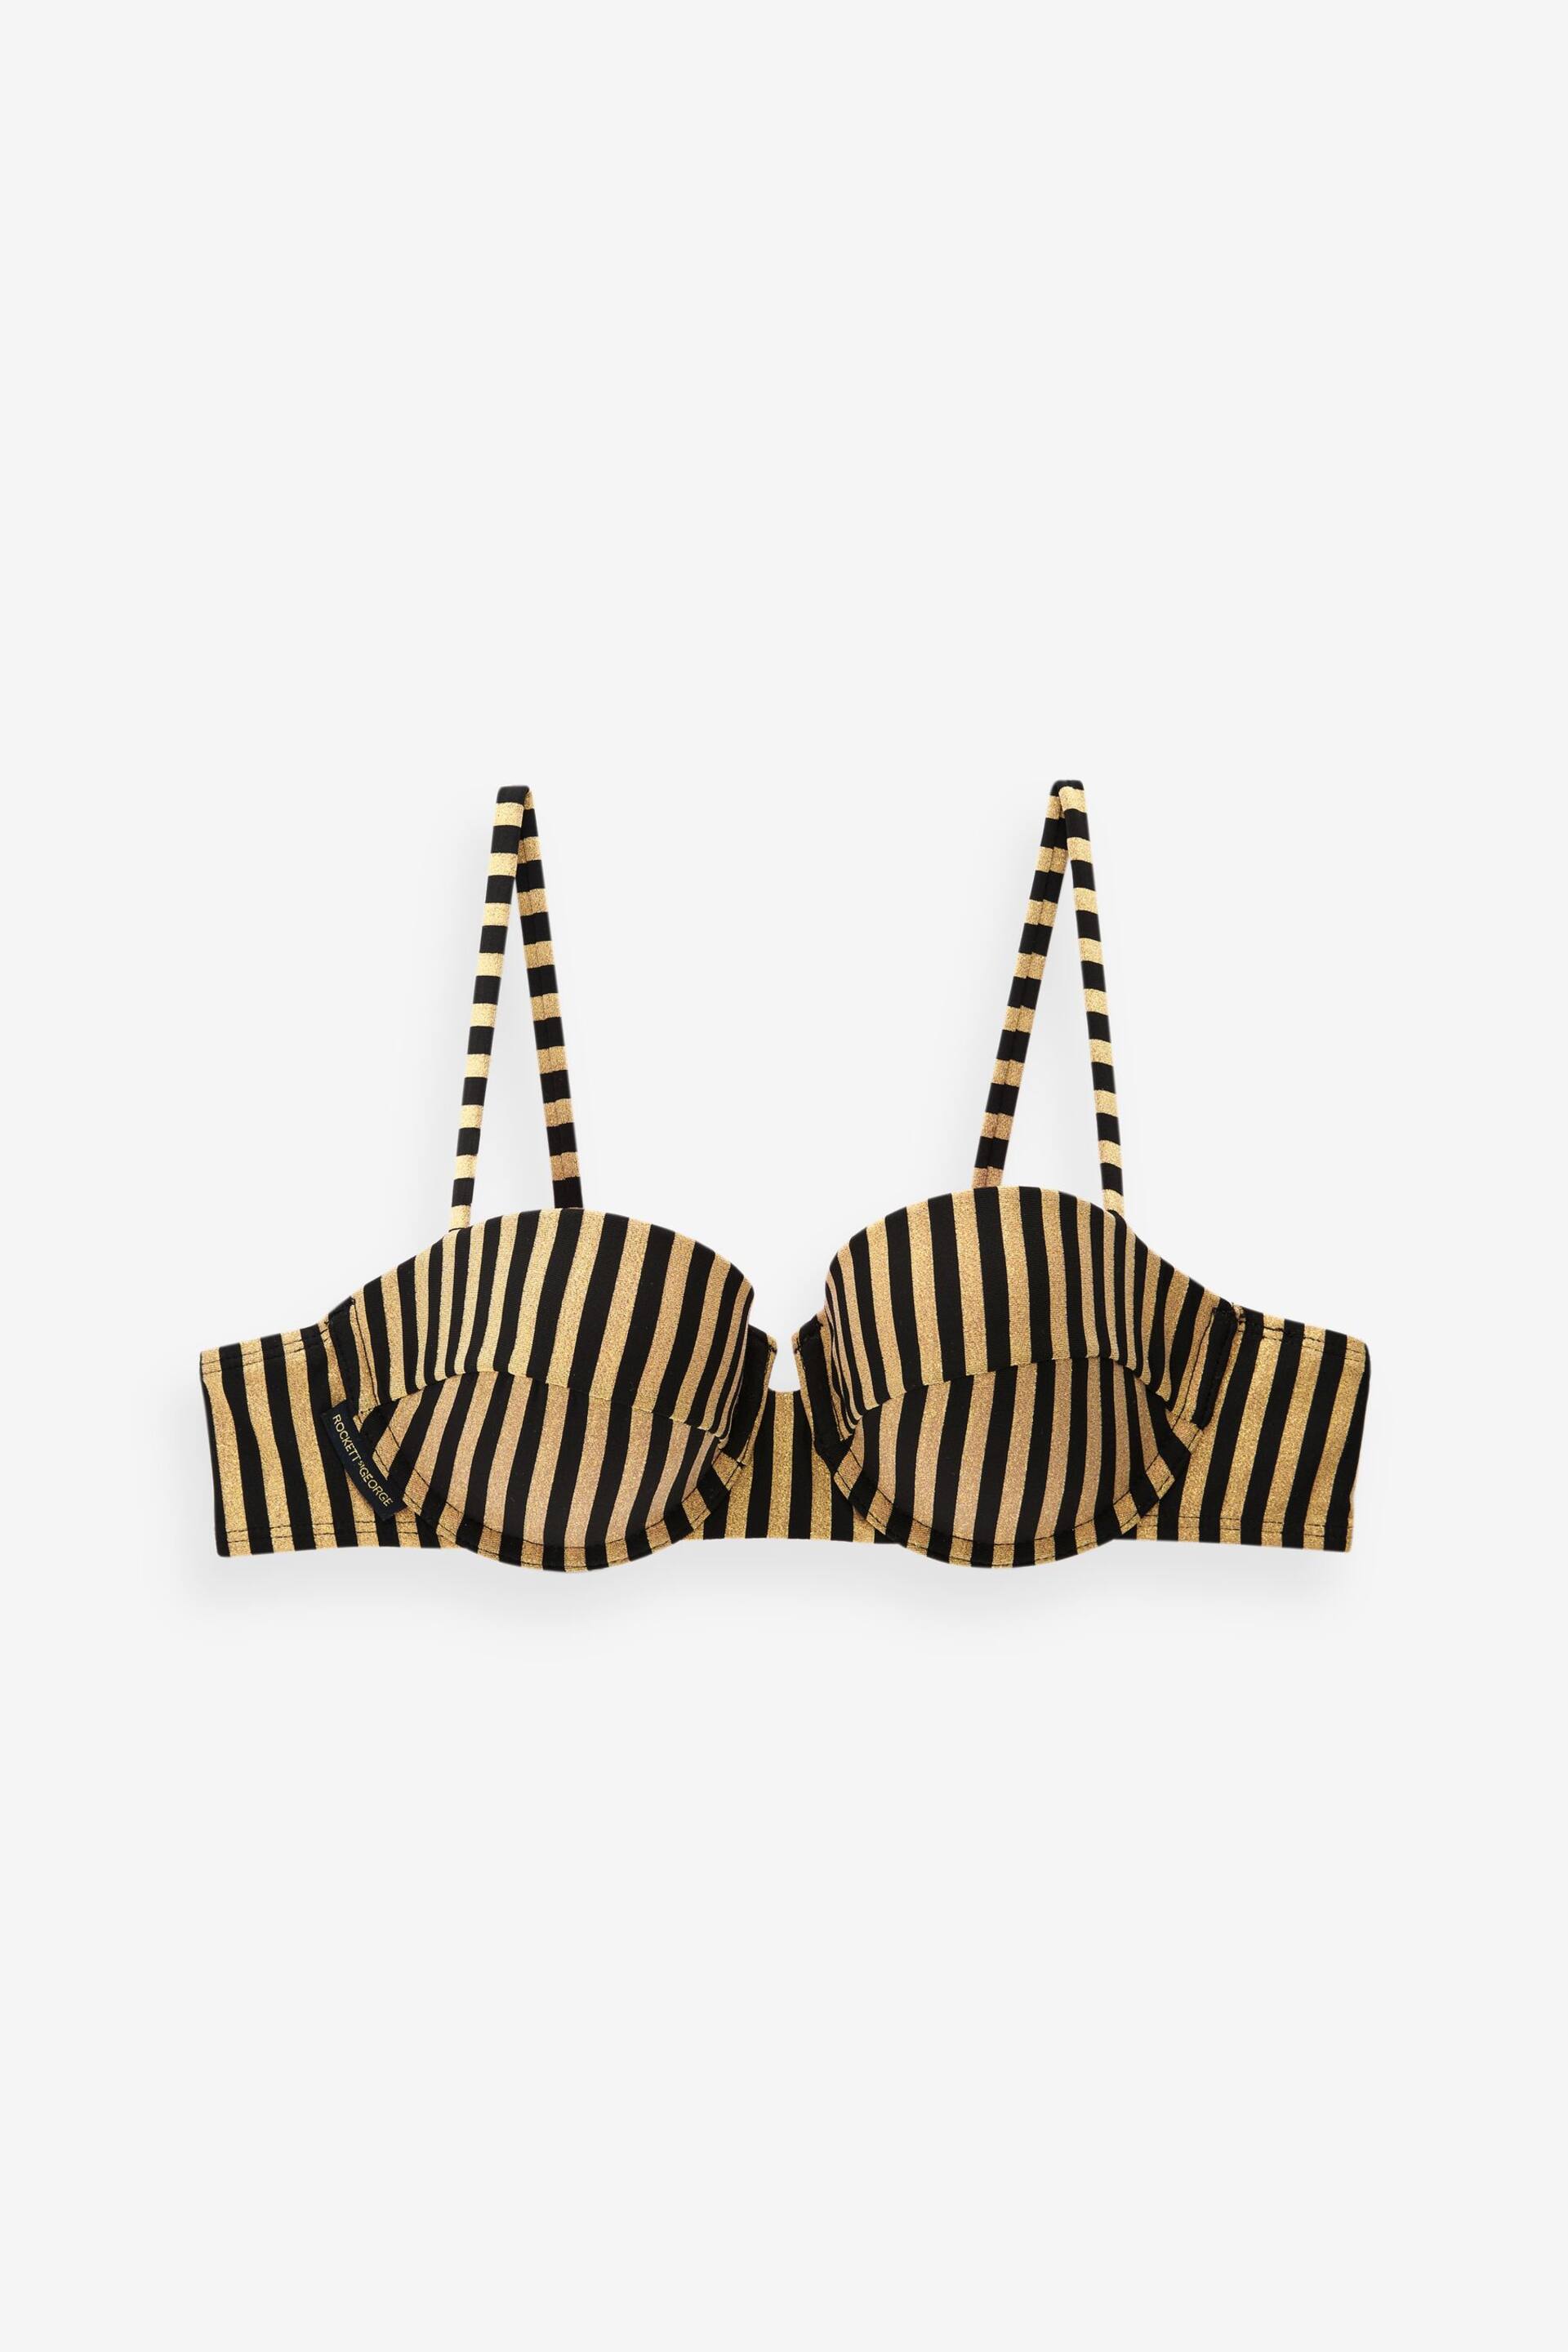 Rockett St George Black/Gold Metallic Stripe Padding Wired Bikini Top - Image 6 of 6